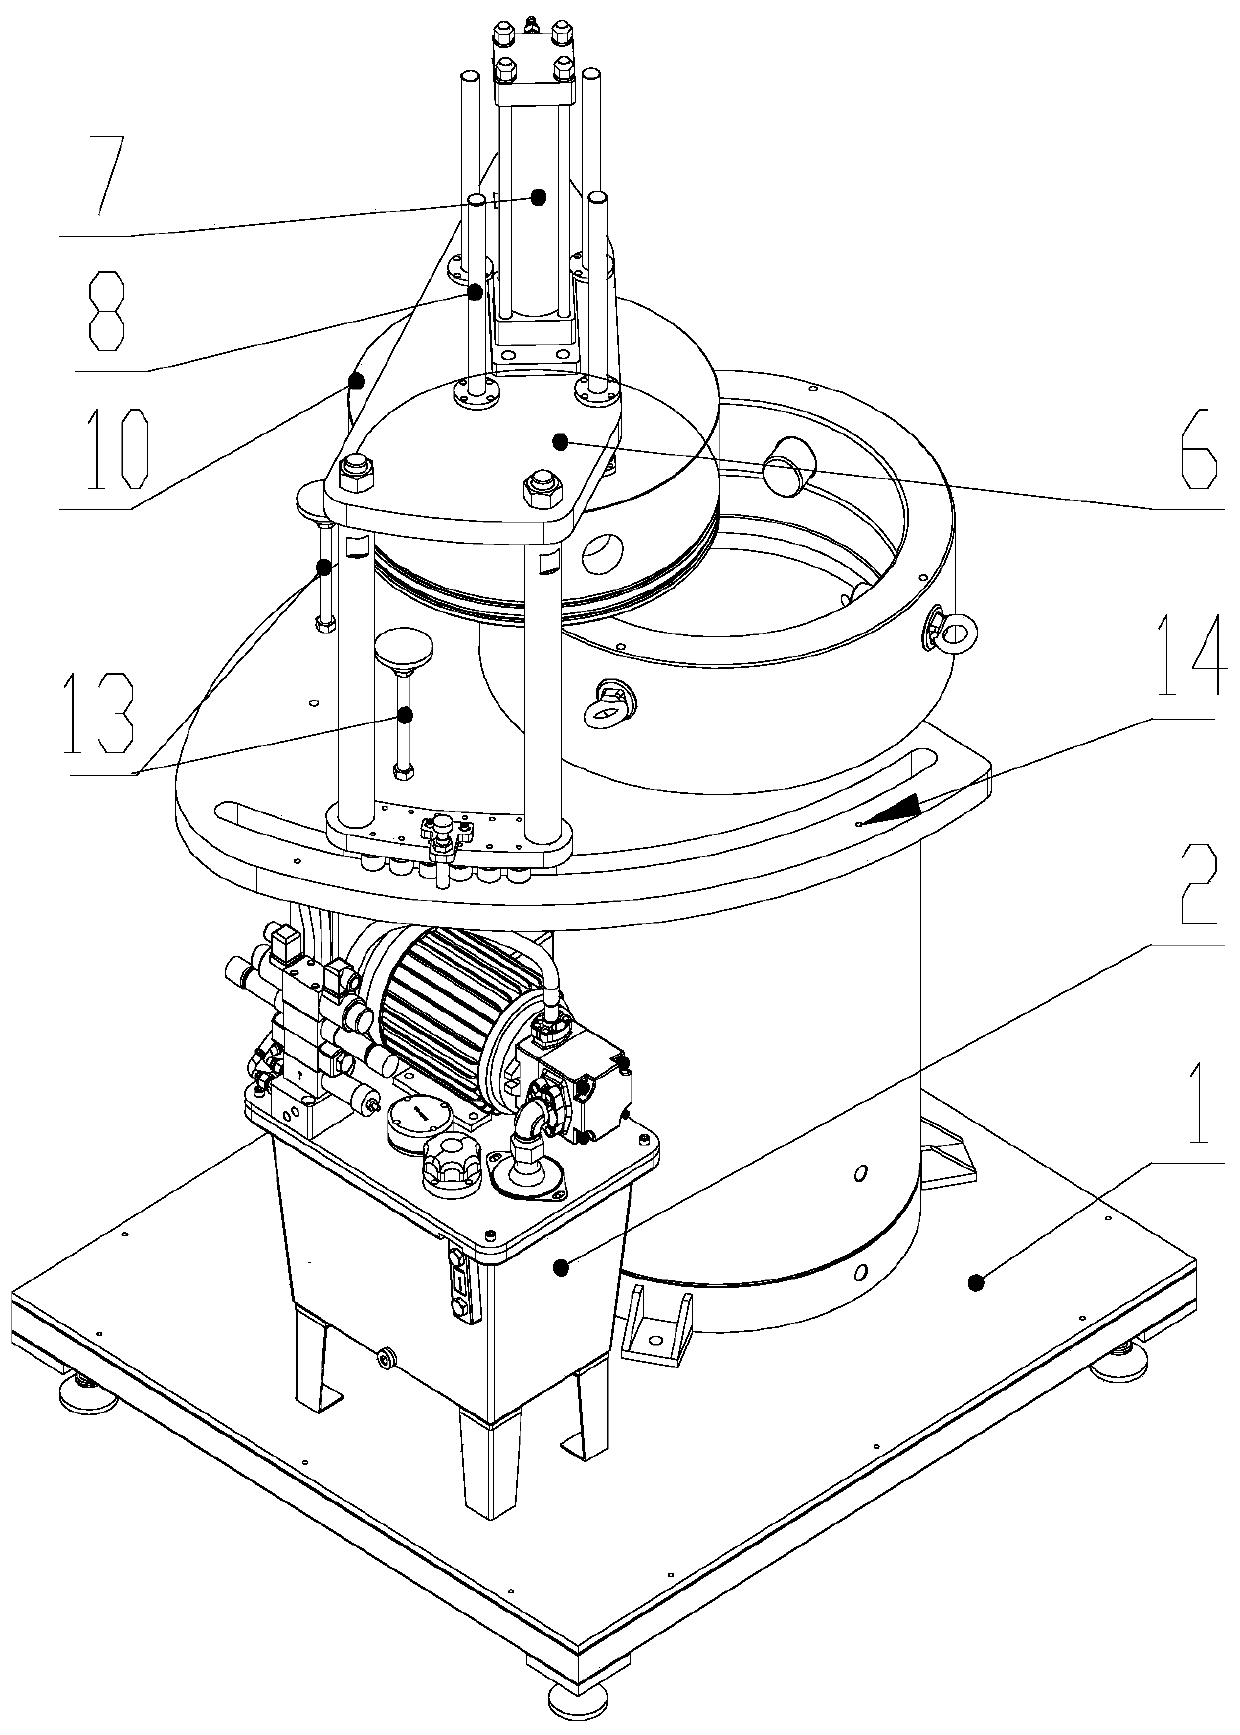 Pressure tank device for simulating deep oversea external pressure test